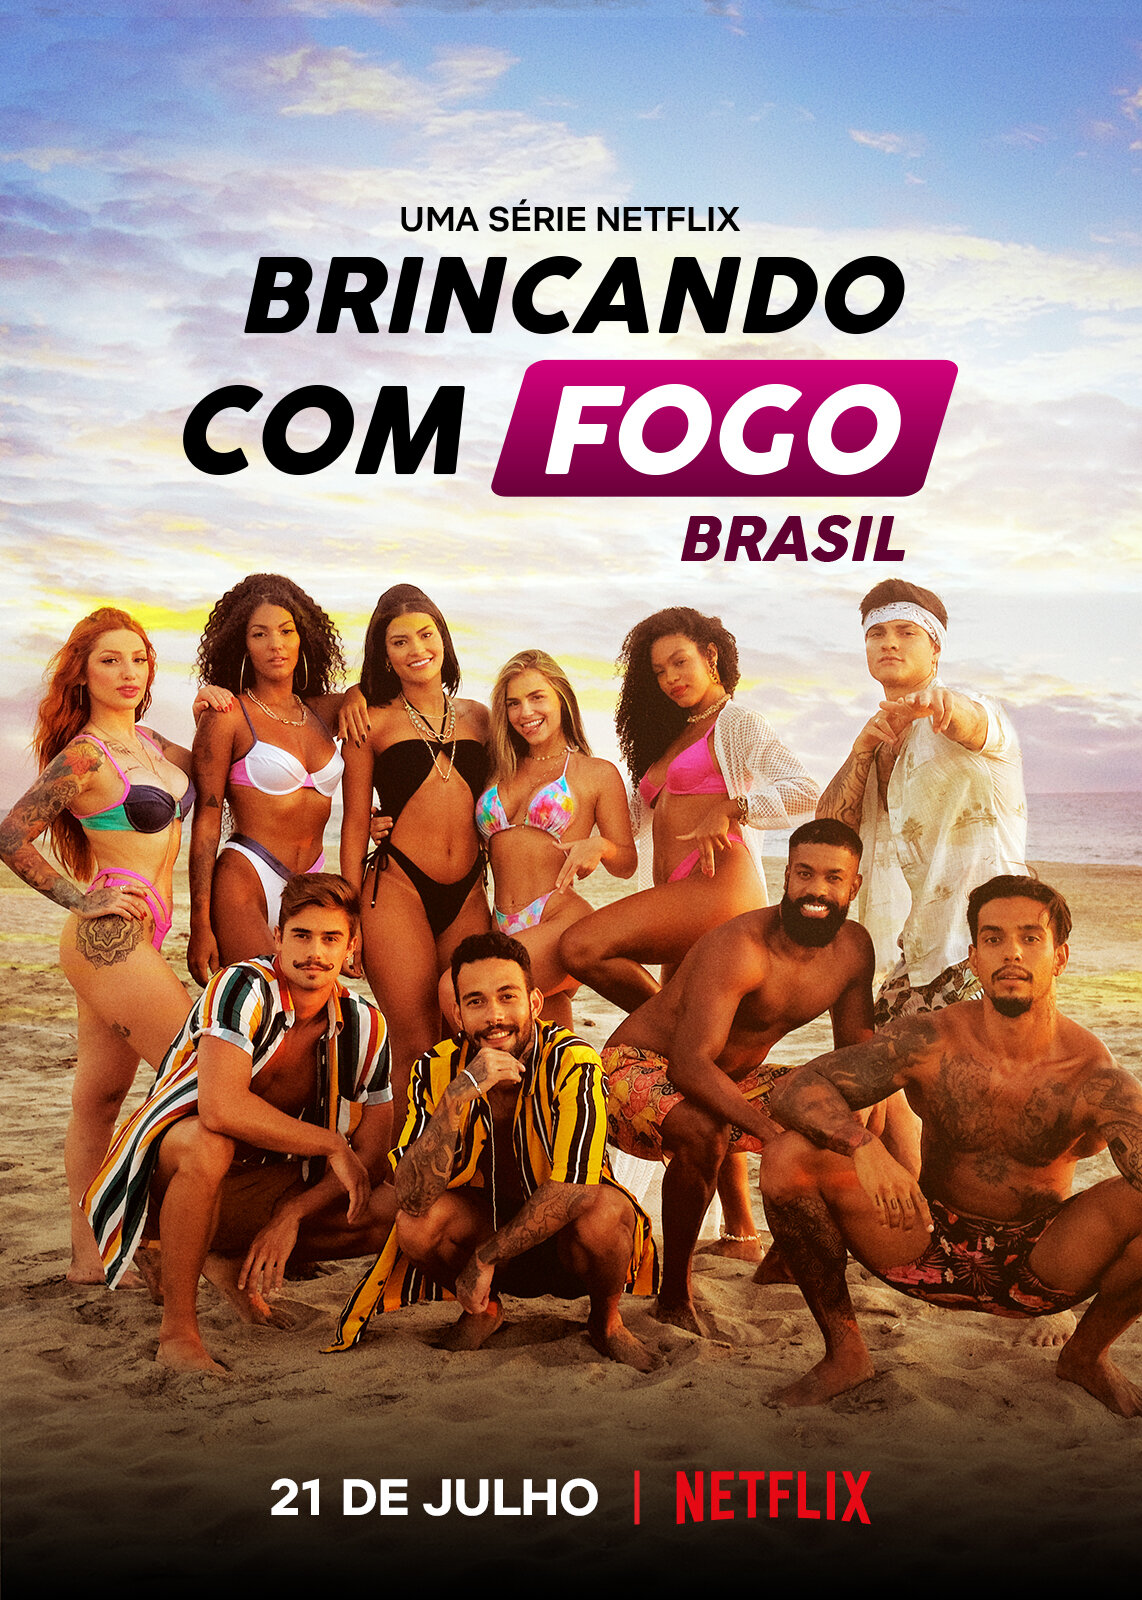 Best of Hot brazil tv shows